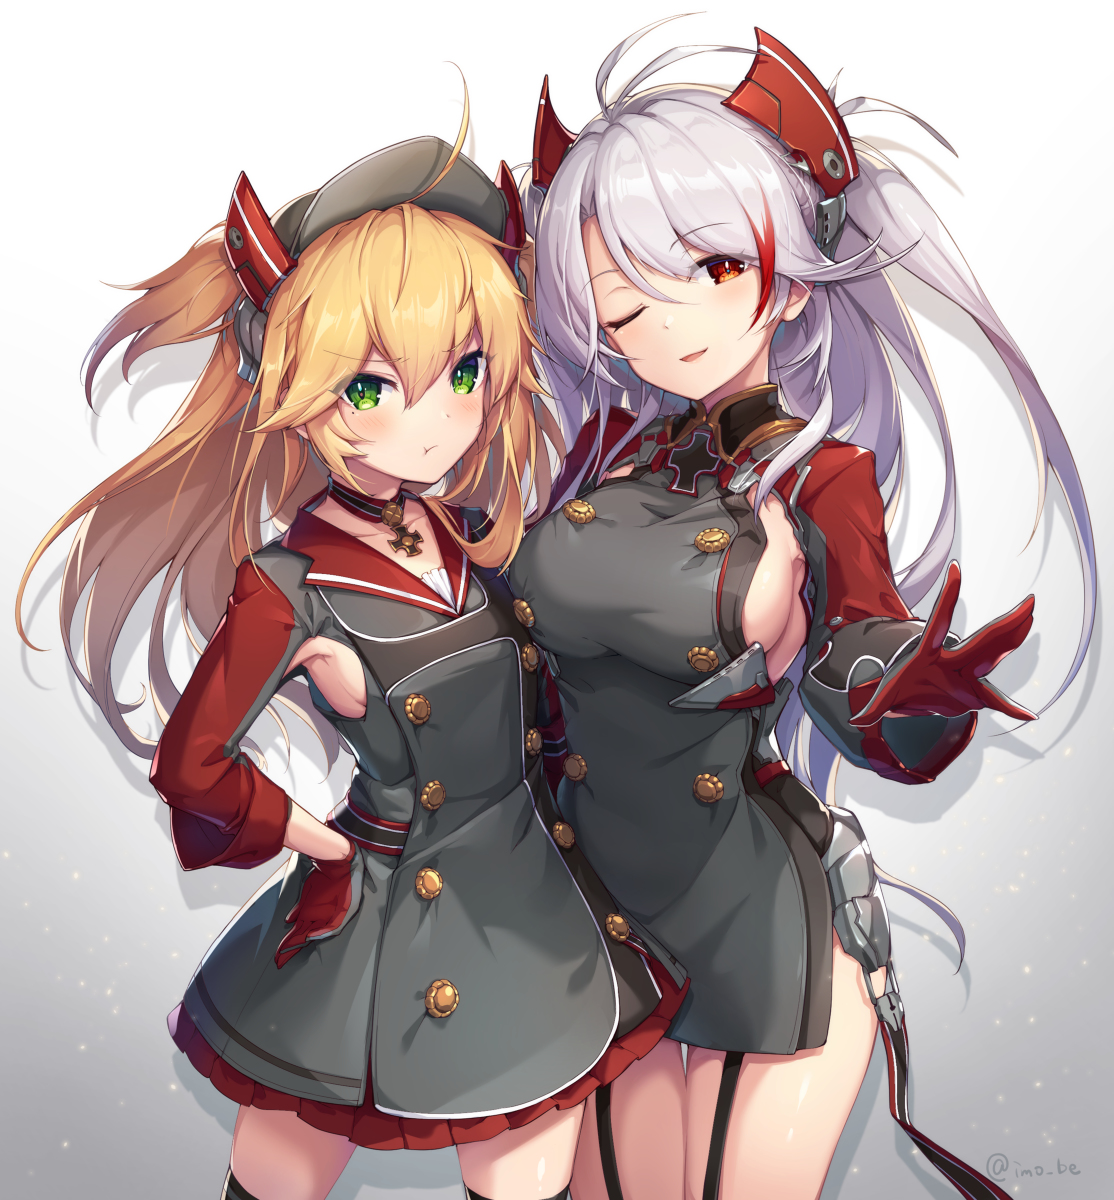 r/AzureLane on Twitter: "Prinz Eugen and Admiral Hipper #AzurLane http...